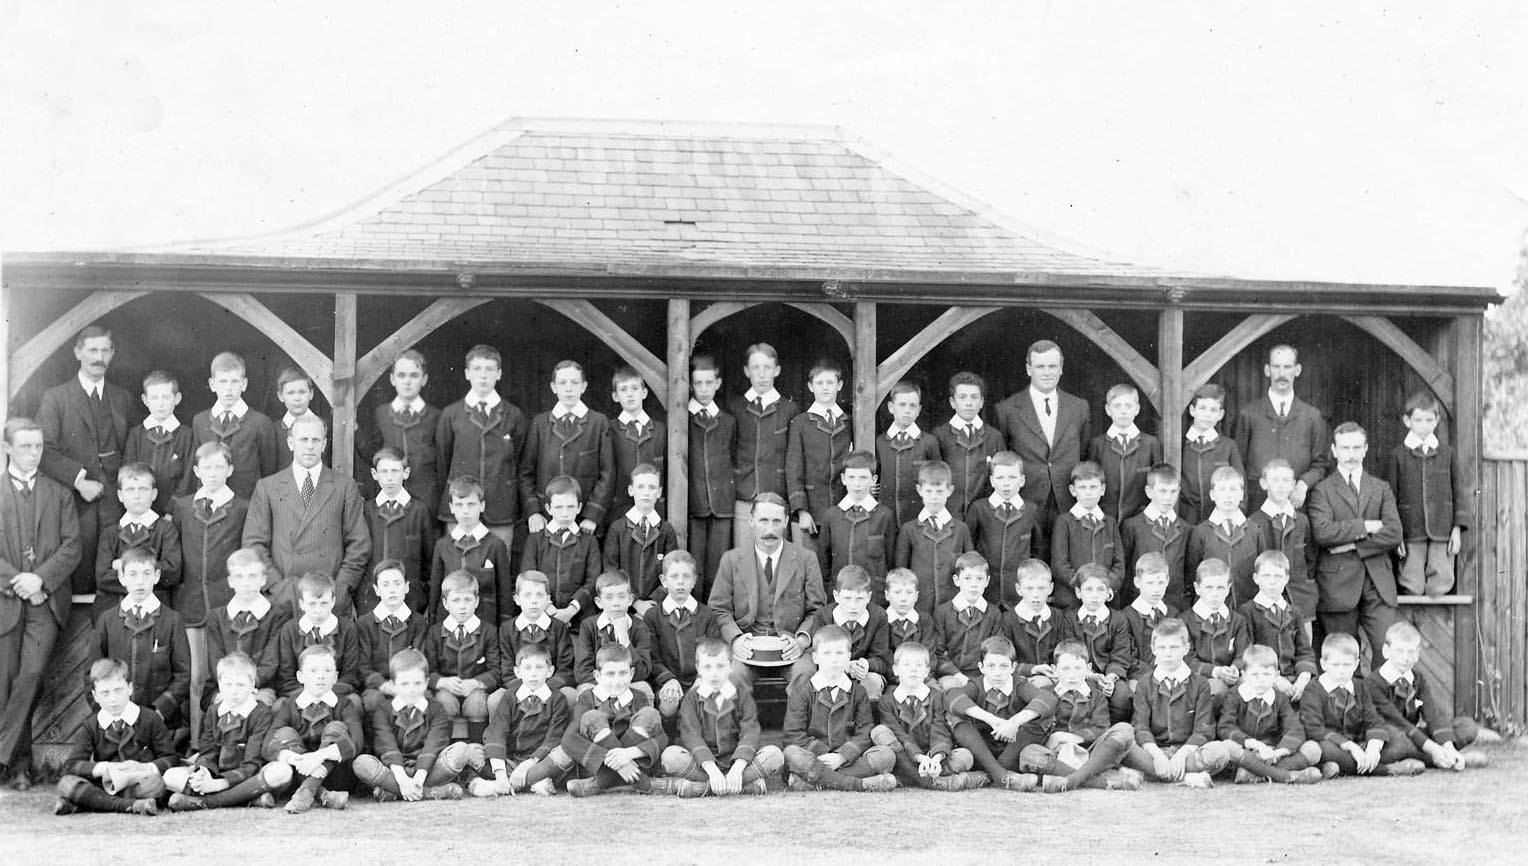 Copthorne Prep School photograph c1913